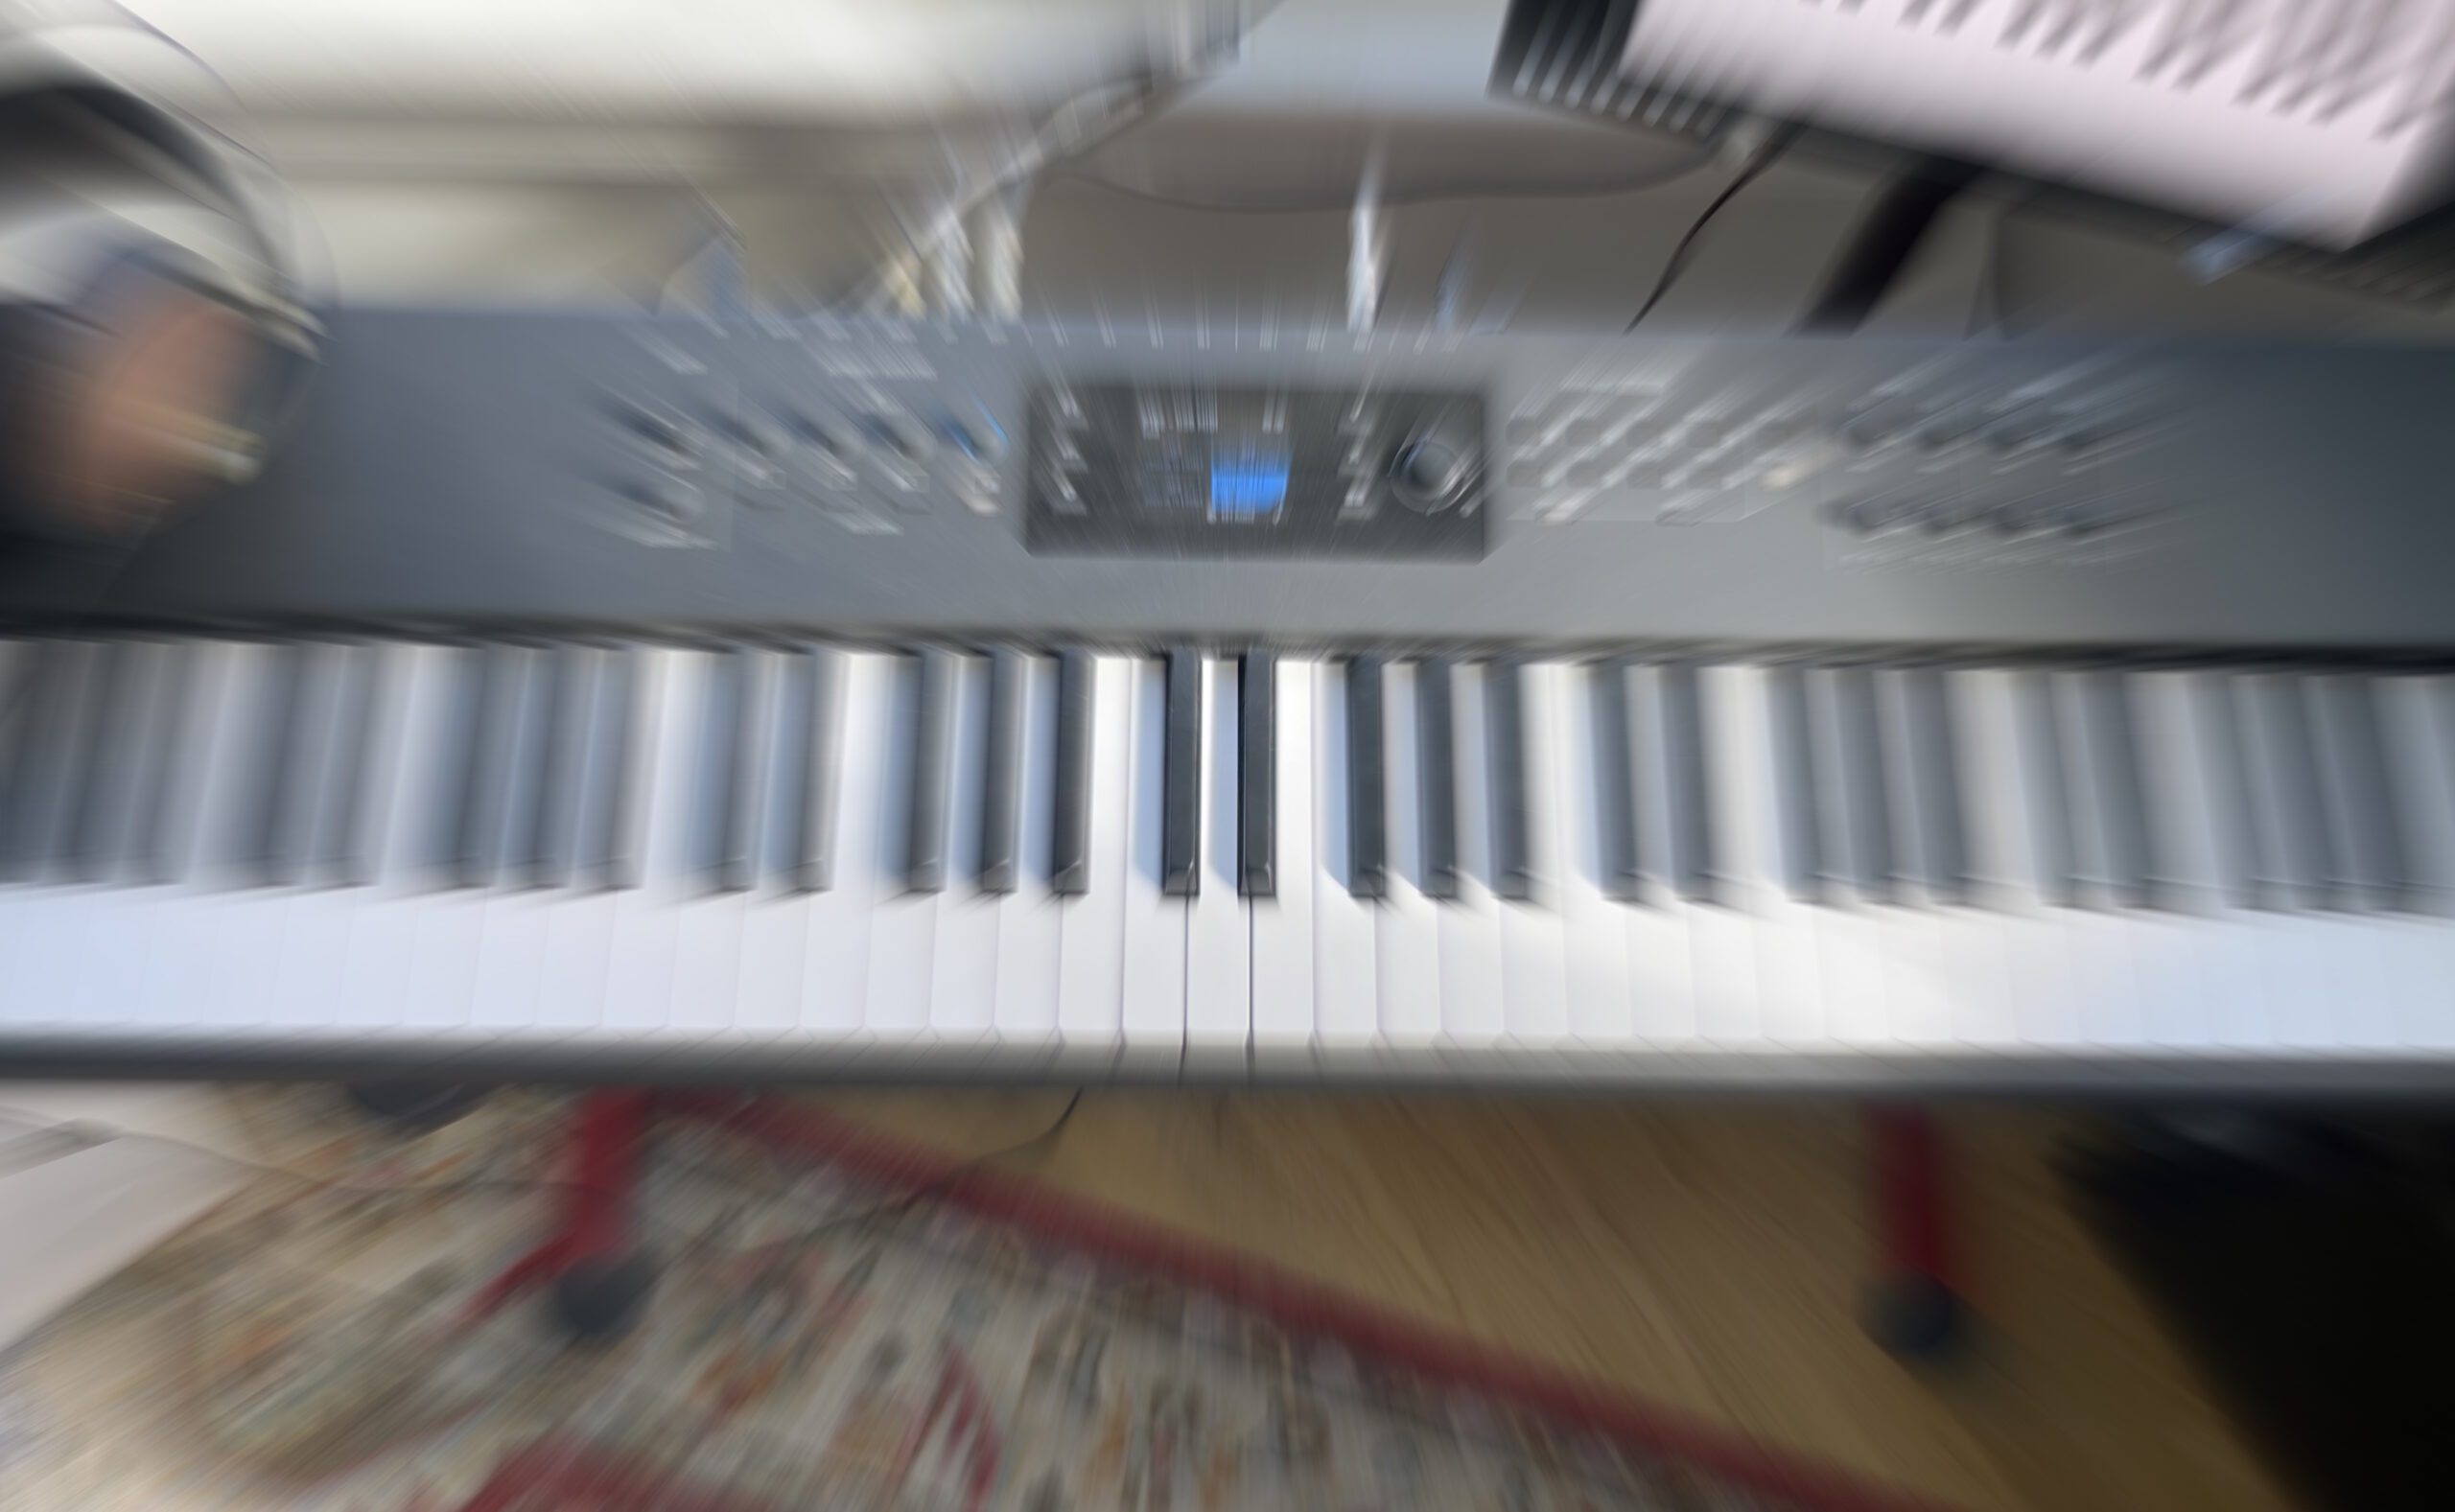 Studiologic Numa X Piano GT: A Well-Rounded Digital Piano